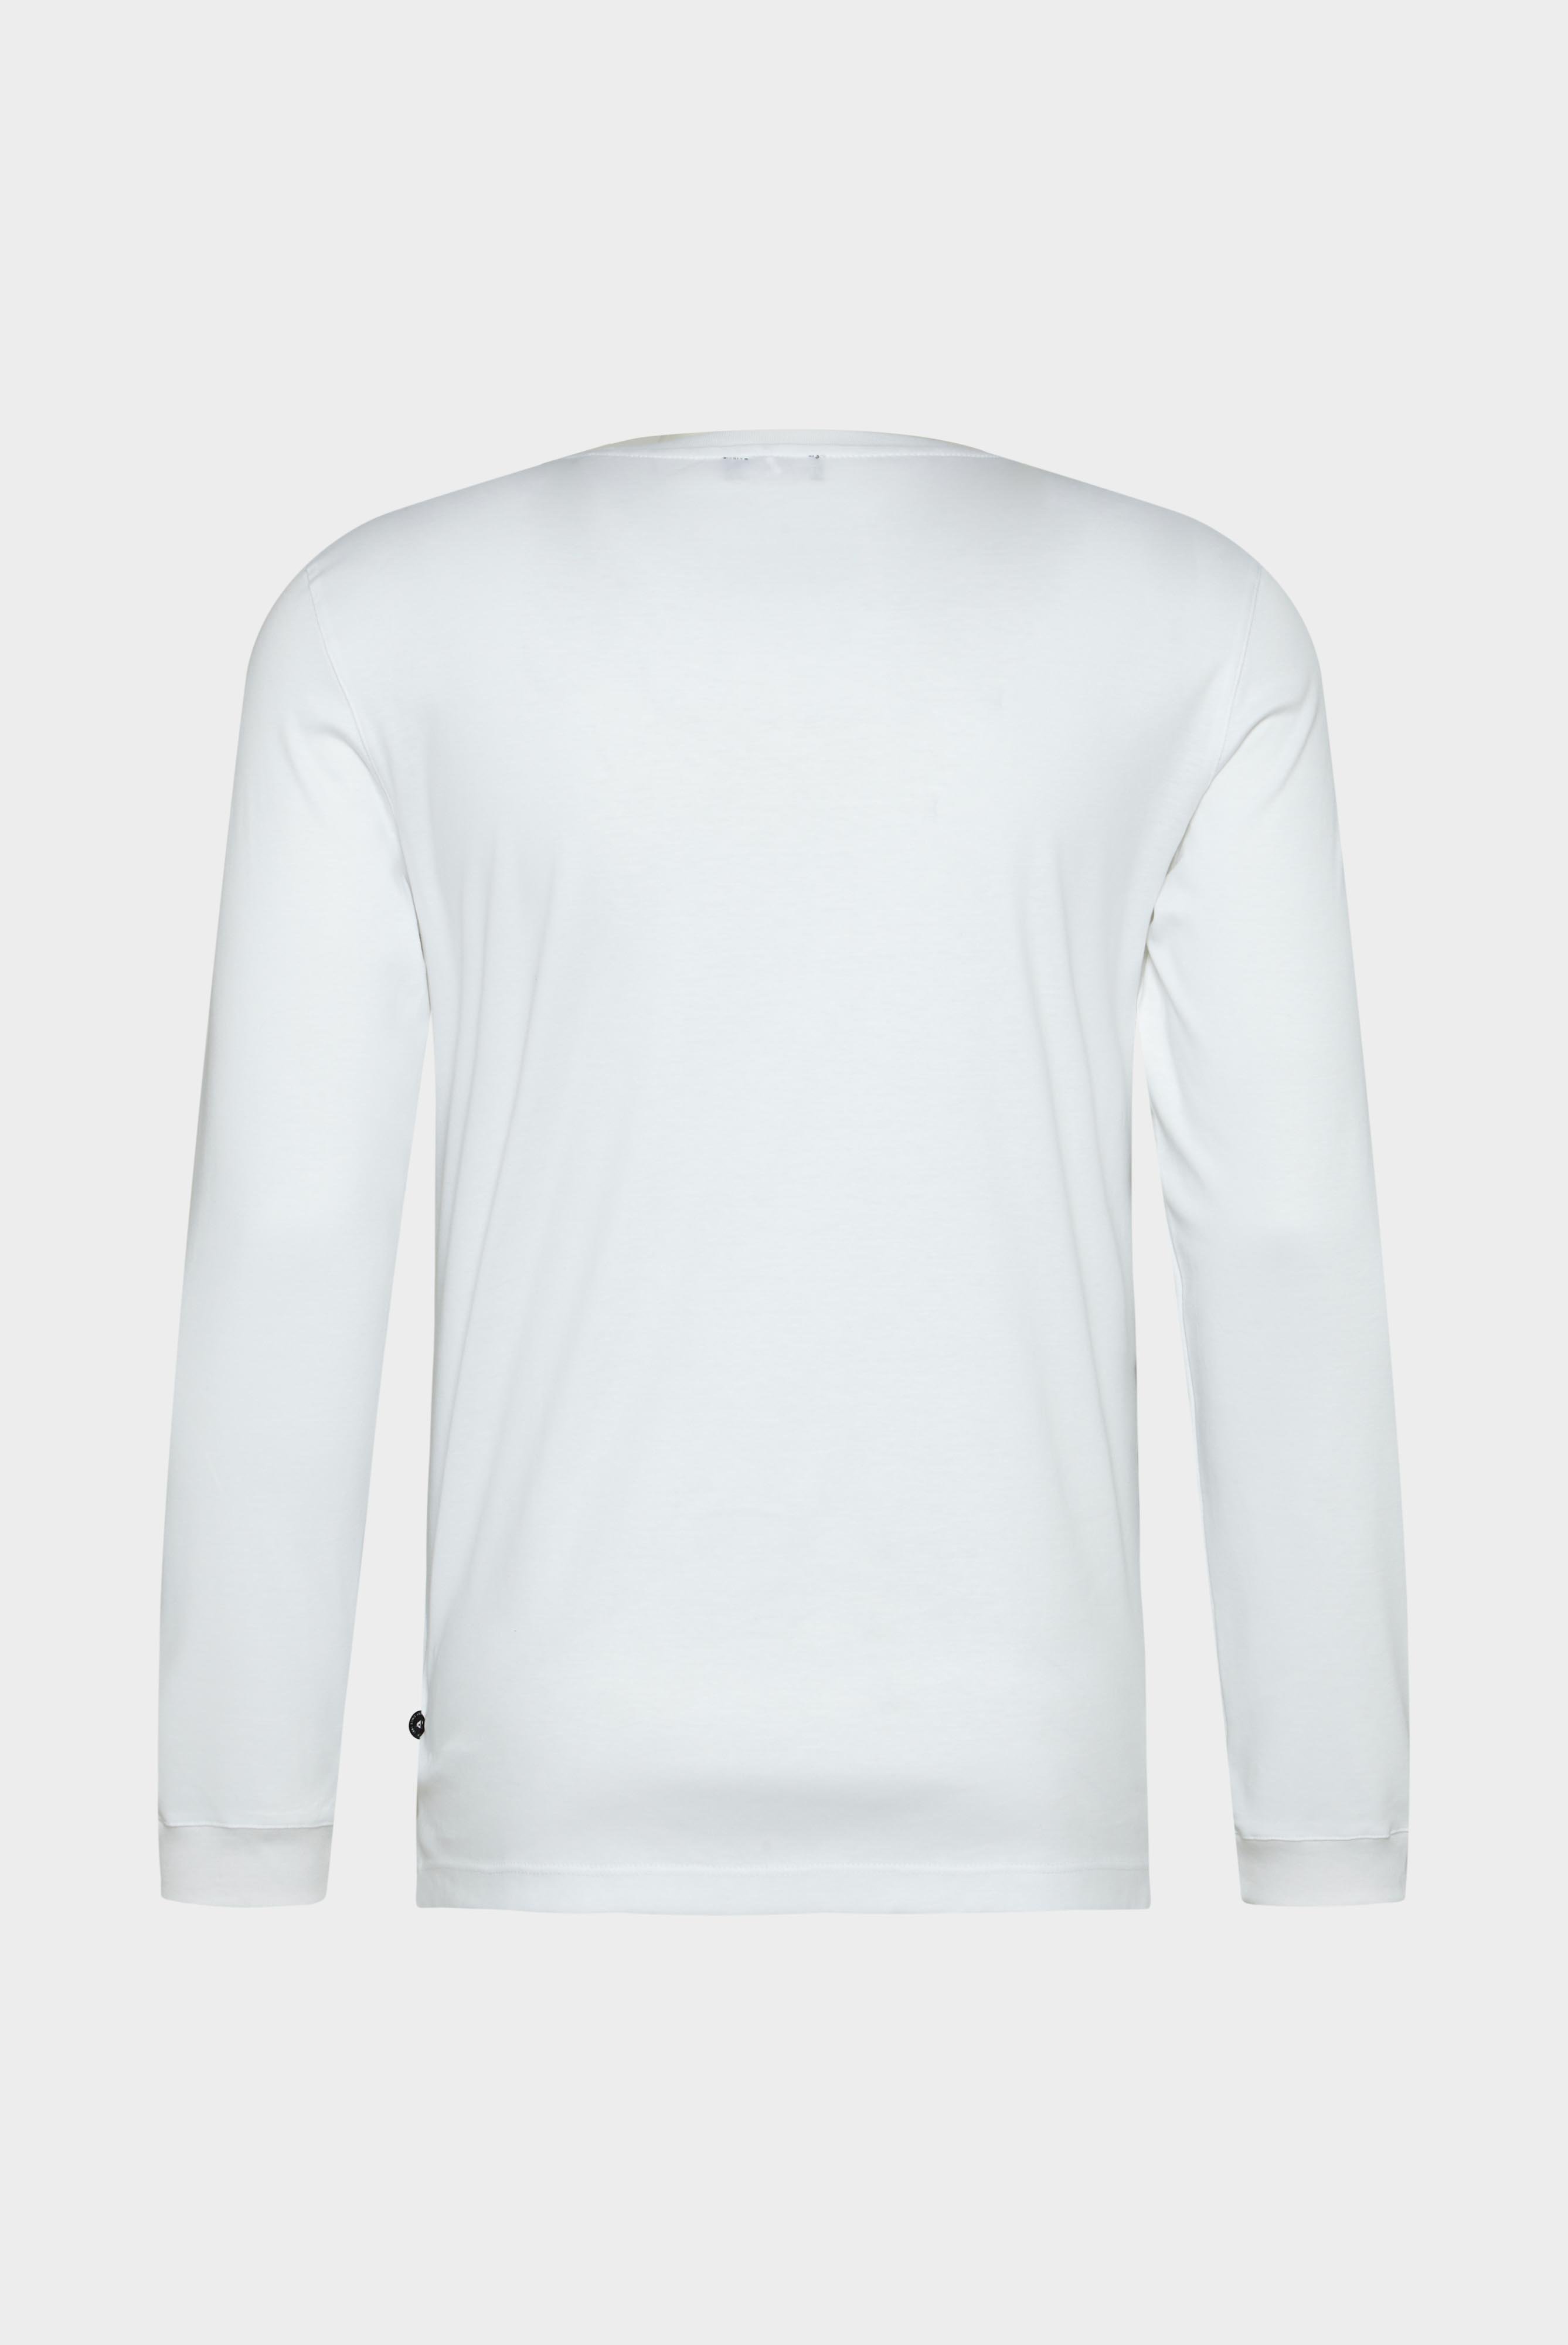 T-Shirts+Longsleeve Swiss Cotton Jersey Crew Neck T-Shirt+20.1718.UX.180031.000.L